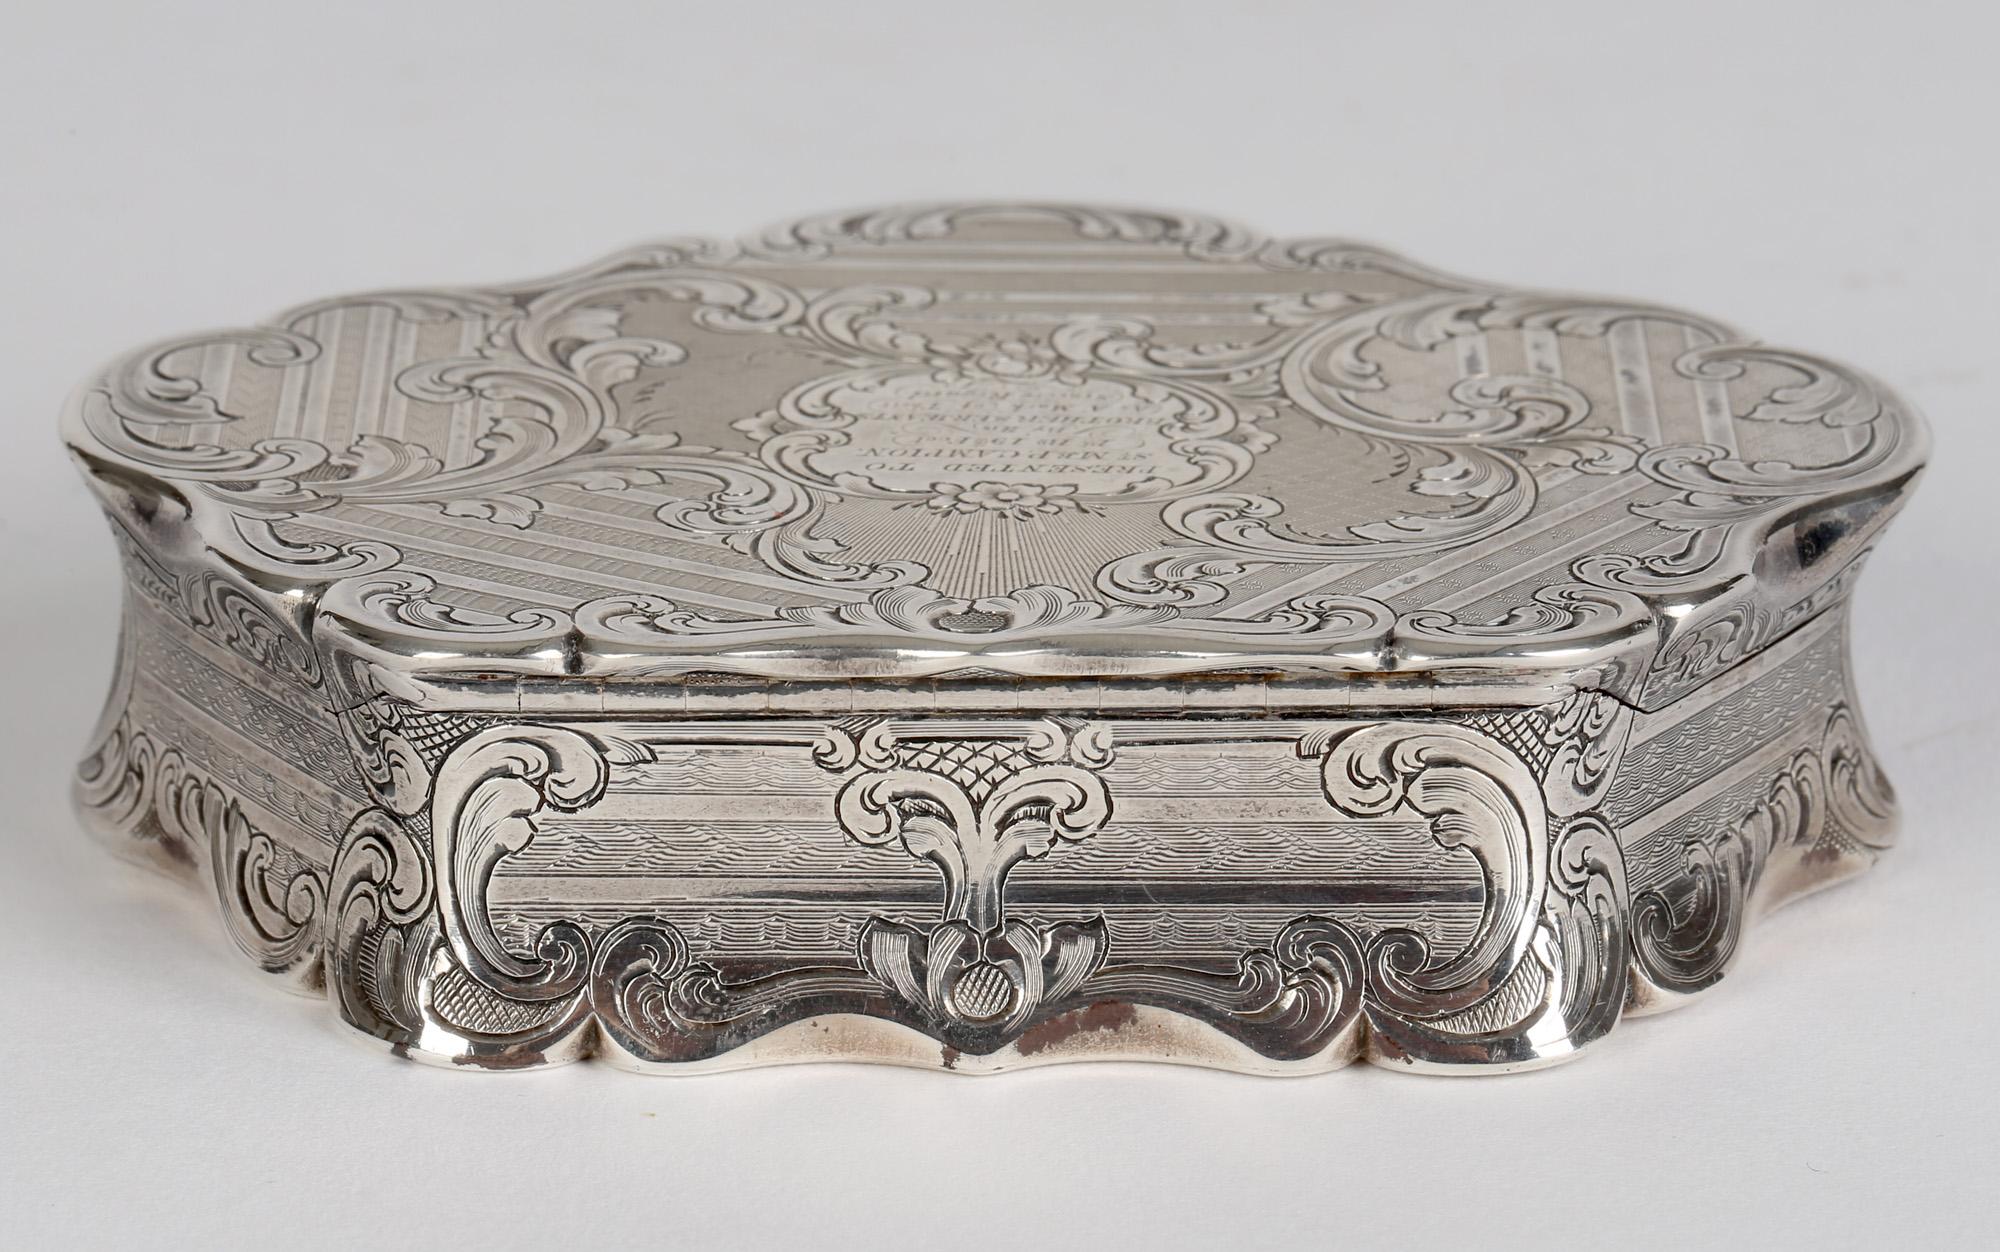 Silver Cased Military Interest Presentation Snuff Box 1847 For Sale 2